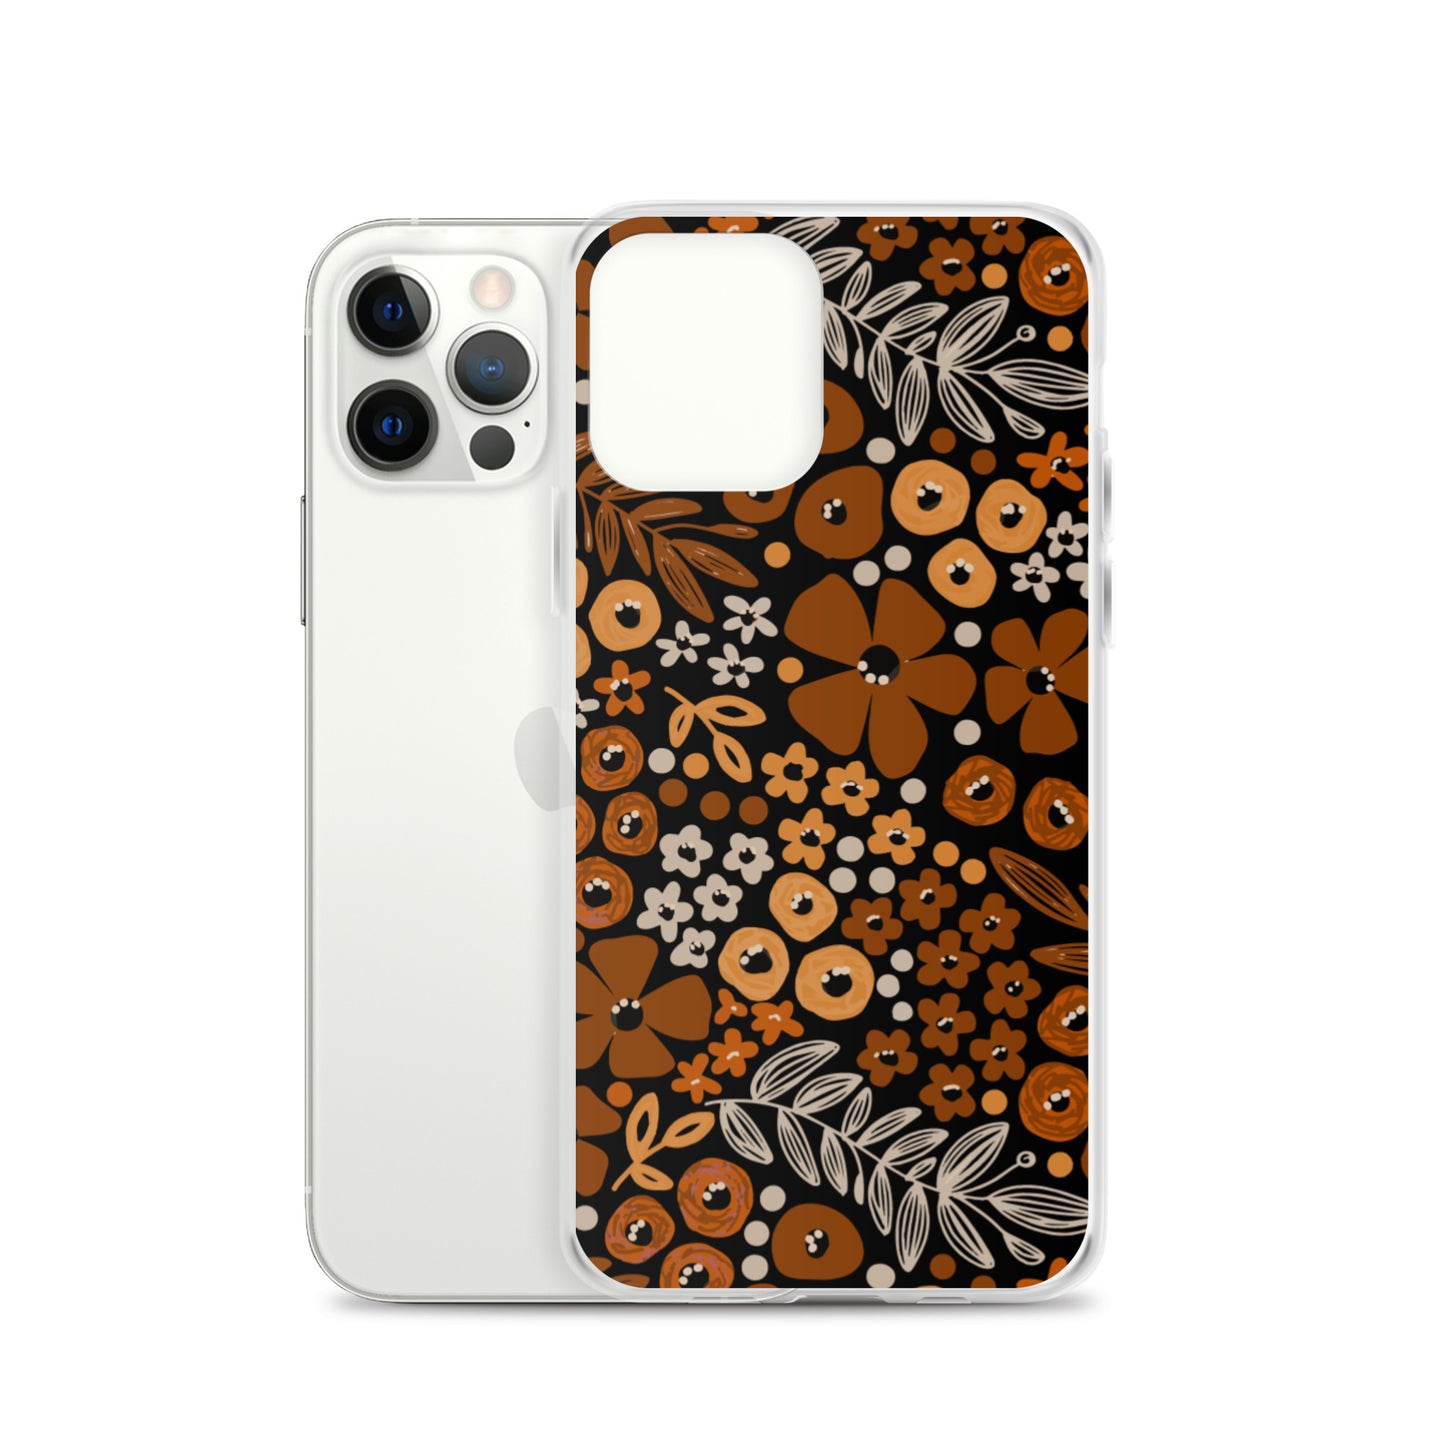 Autumn Floral iPhone Case